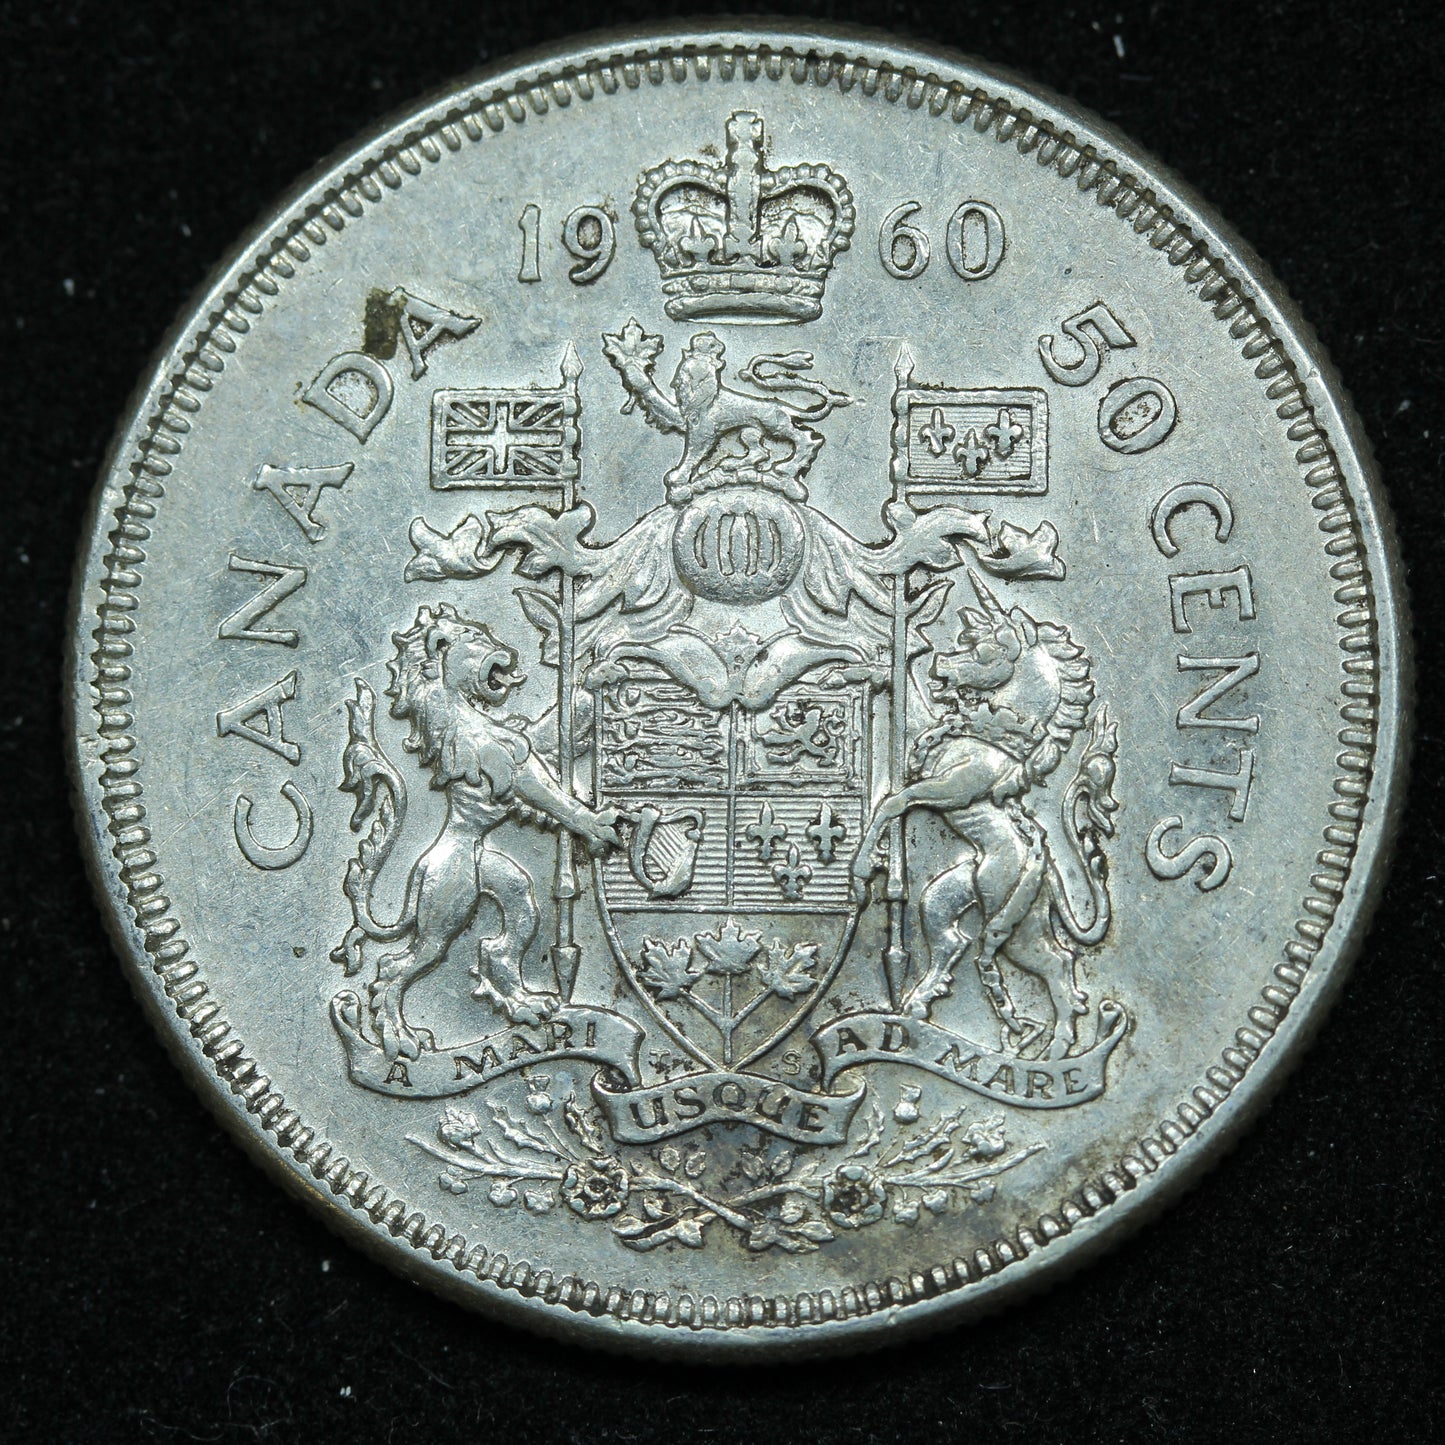 1960 Canada 50 Cents Silver Coin - Elizabeth II - KM #56